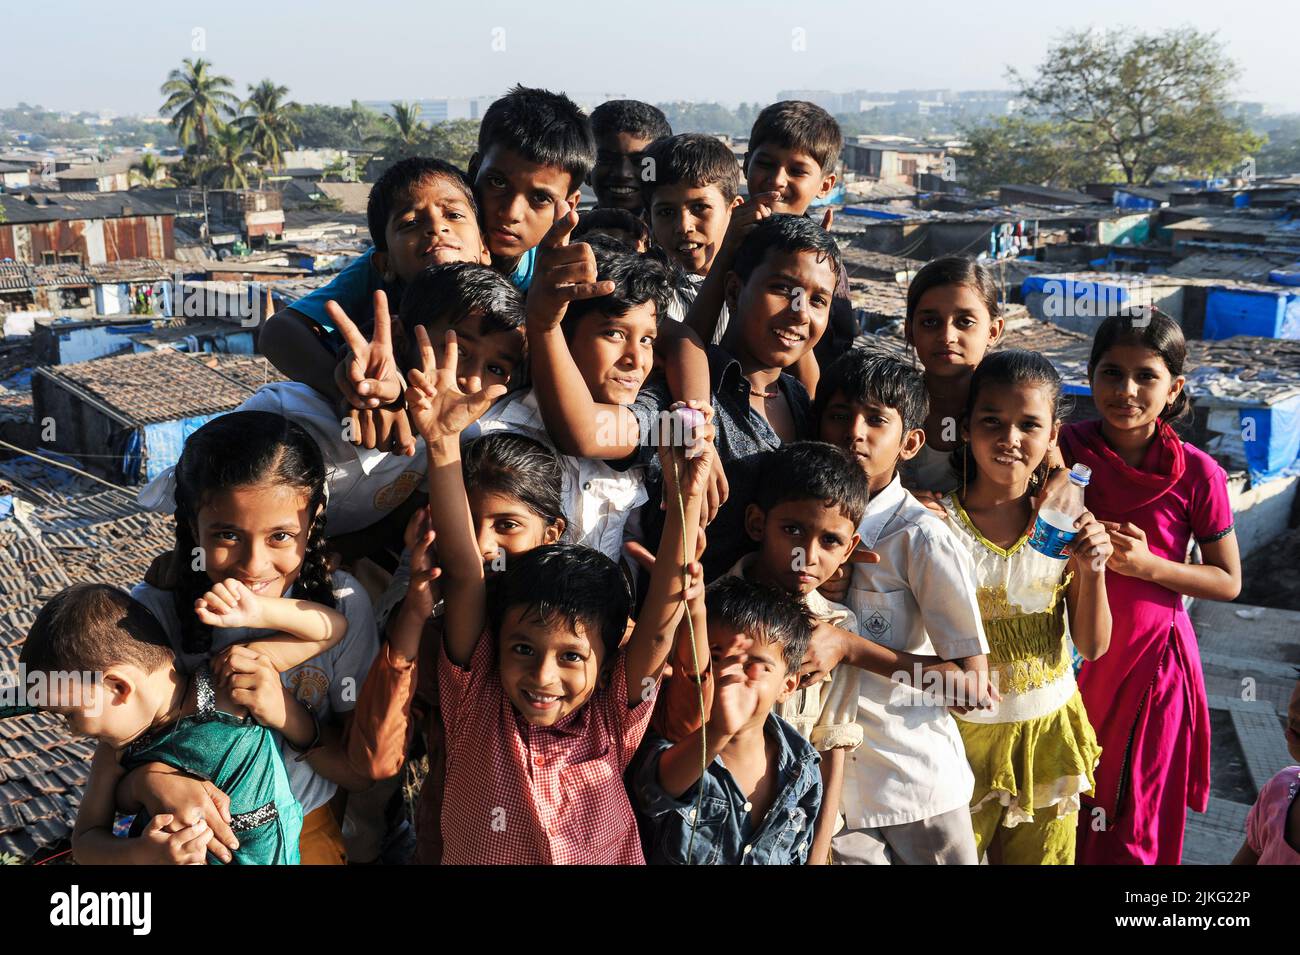 10.12.2011, India, , Mumbai - Children in a shantytown in Shivaji Nagar near Chhatrapati Shivaji Maharaj International Airport. 0SL111210D006CAROEX.JP Stock Photo